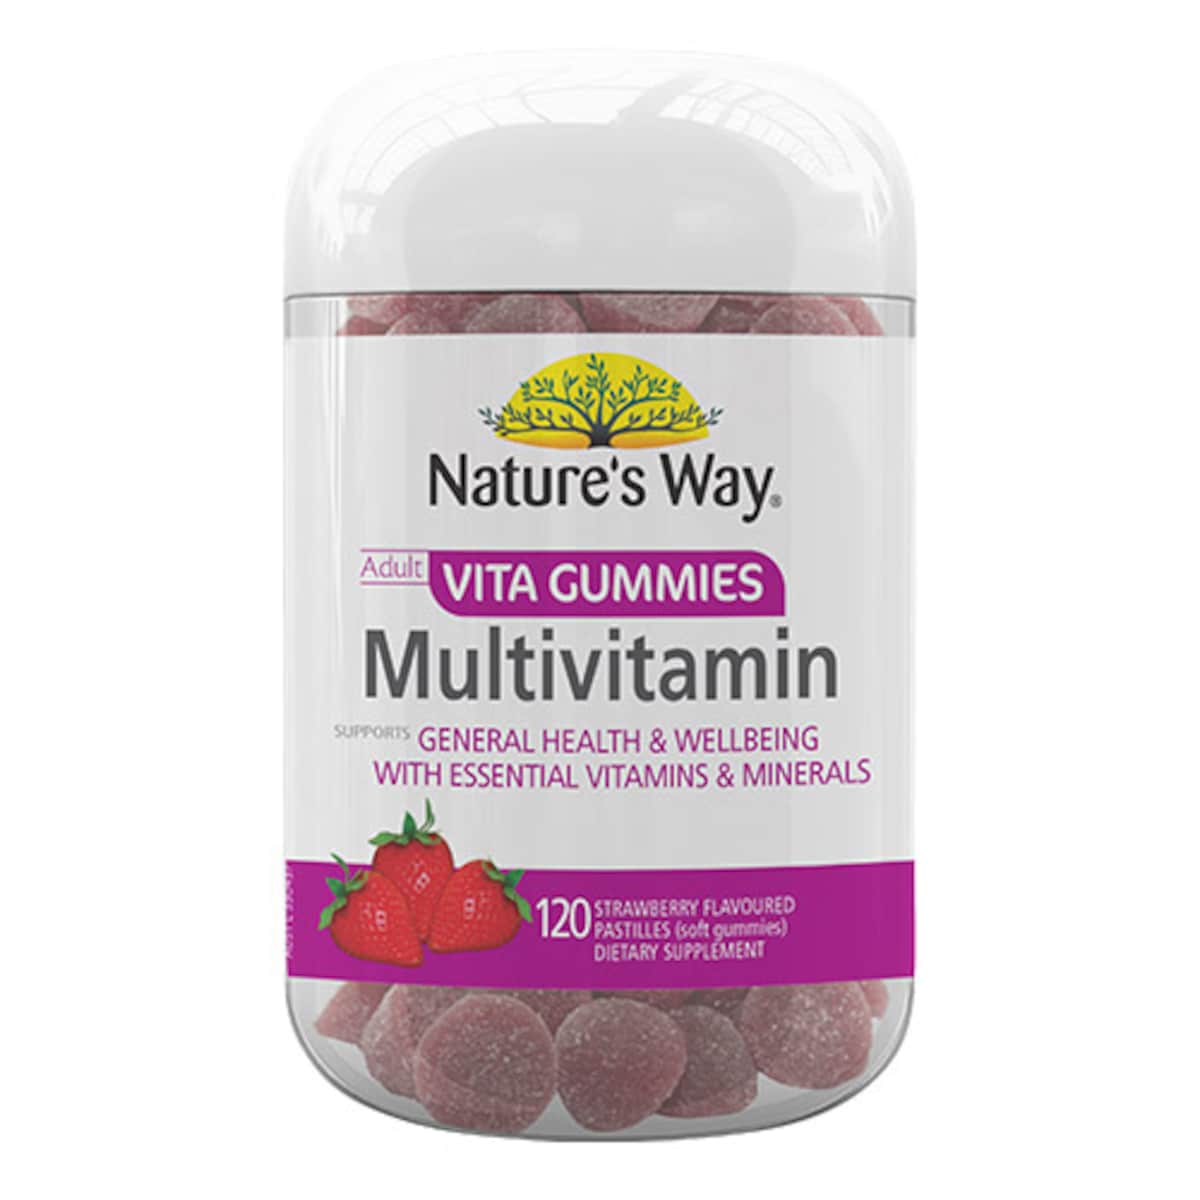 Natures Way Adult Vita Gummies MultiVitamin 120 Pack